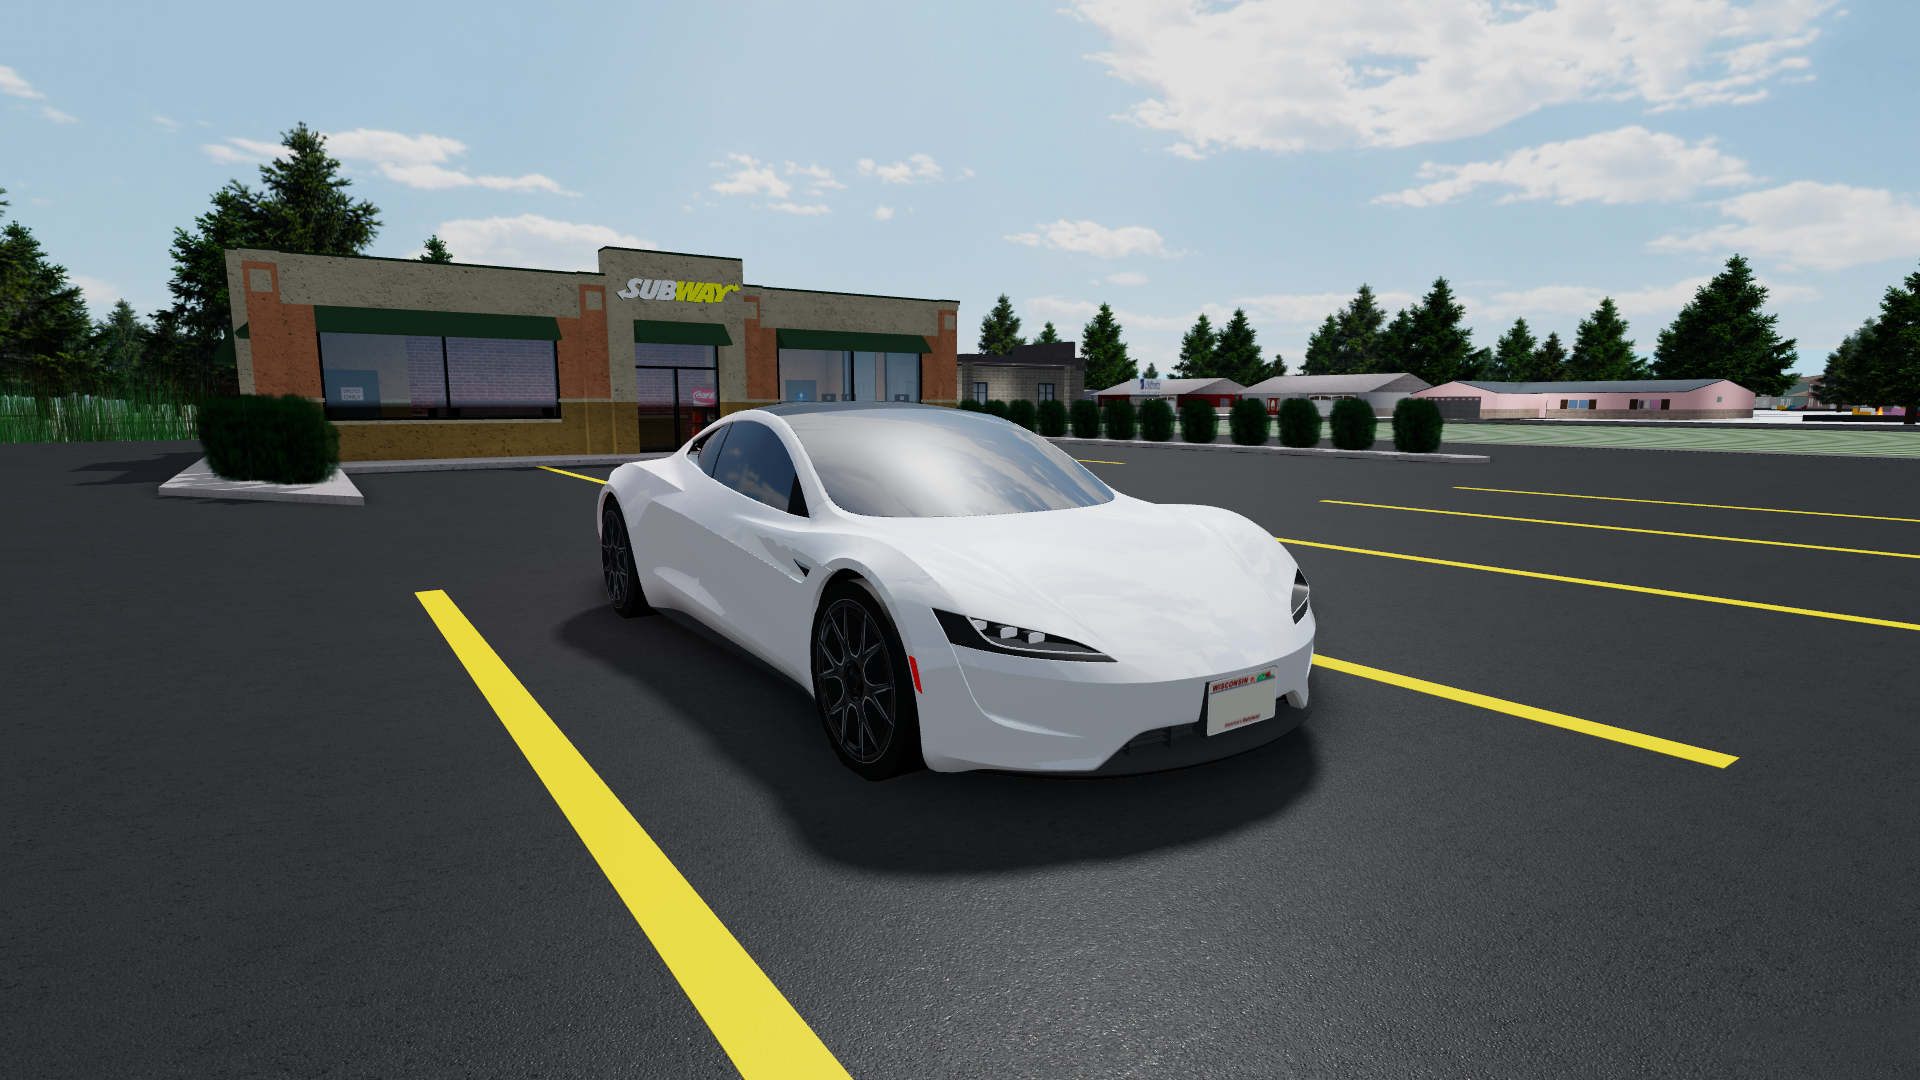 2020 Tesla Roadster Greenville Wisconsin Wiki Fandom - top 5 affordable cars in greenville wi roblox